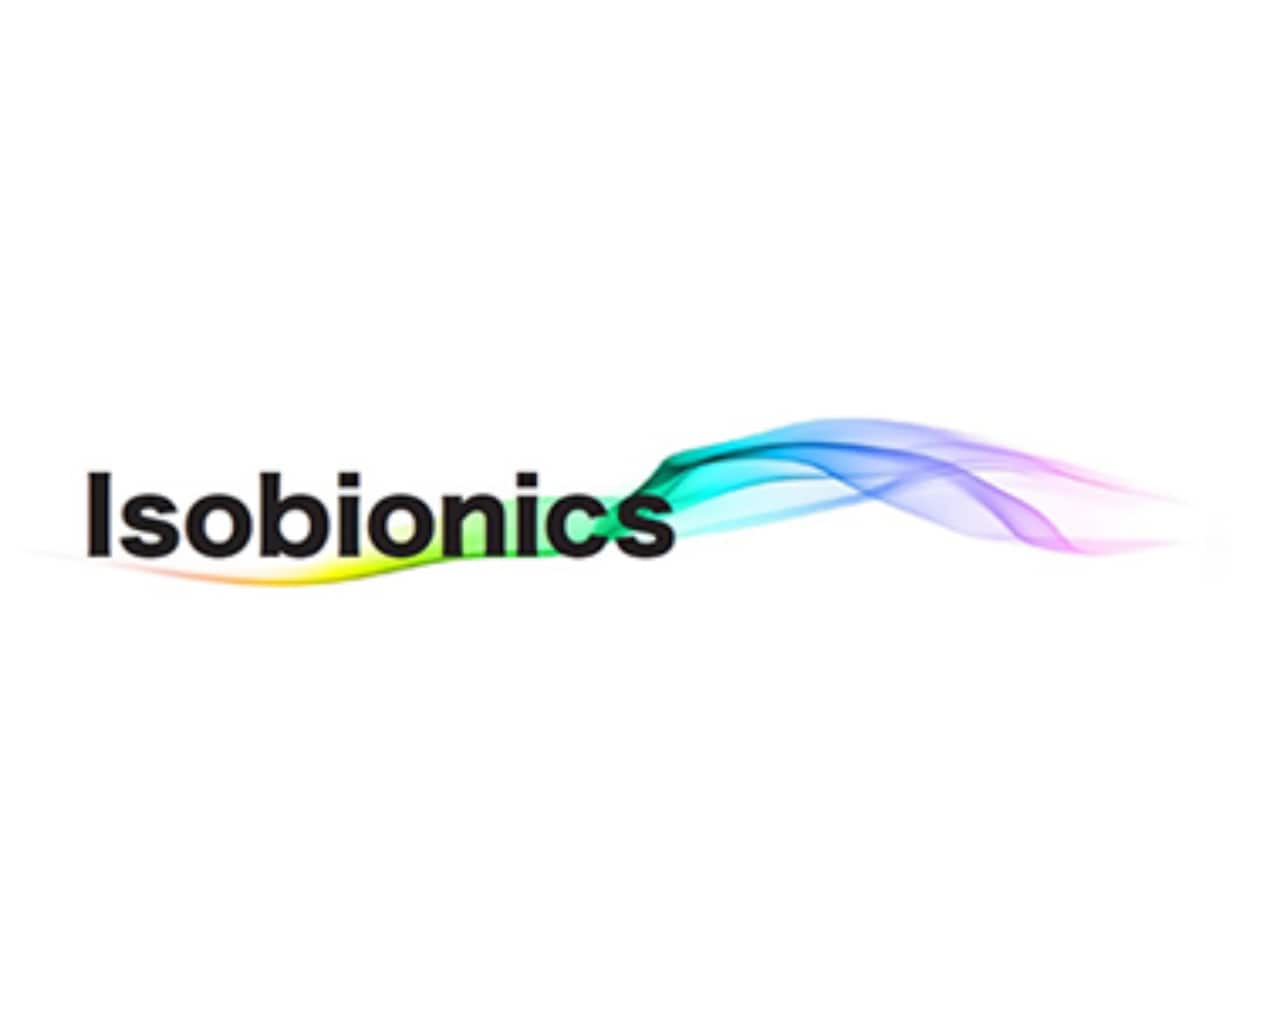 Isobionics